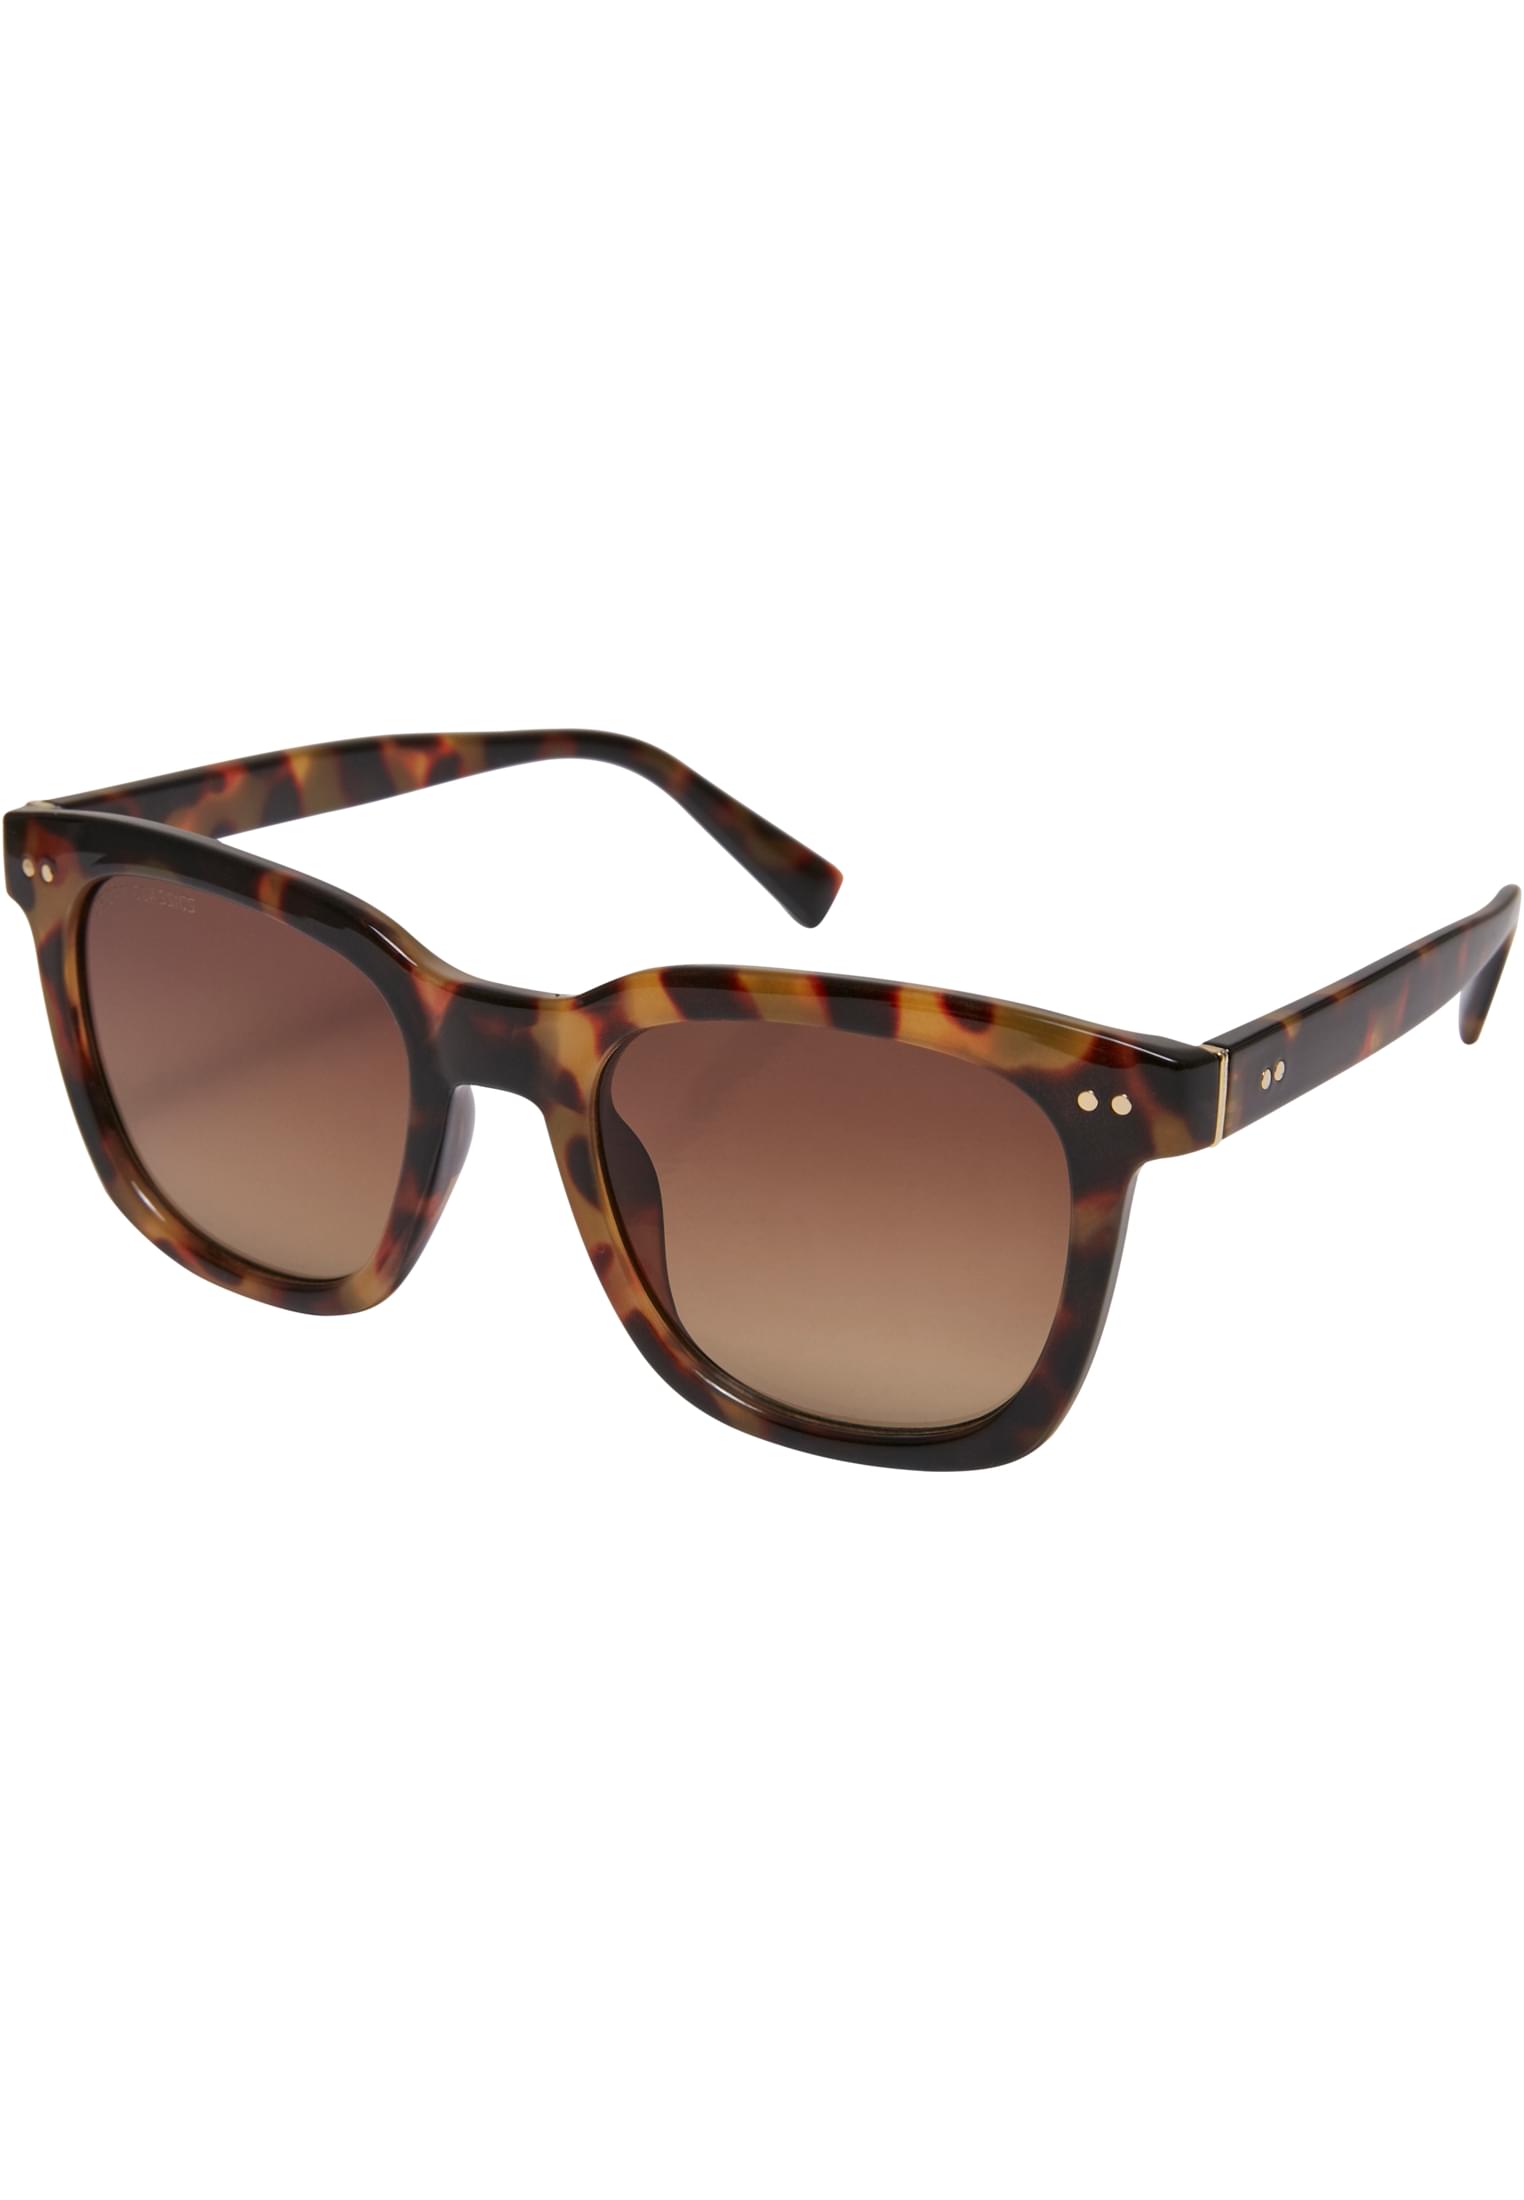 Sunglasses Naples Amber/Brown